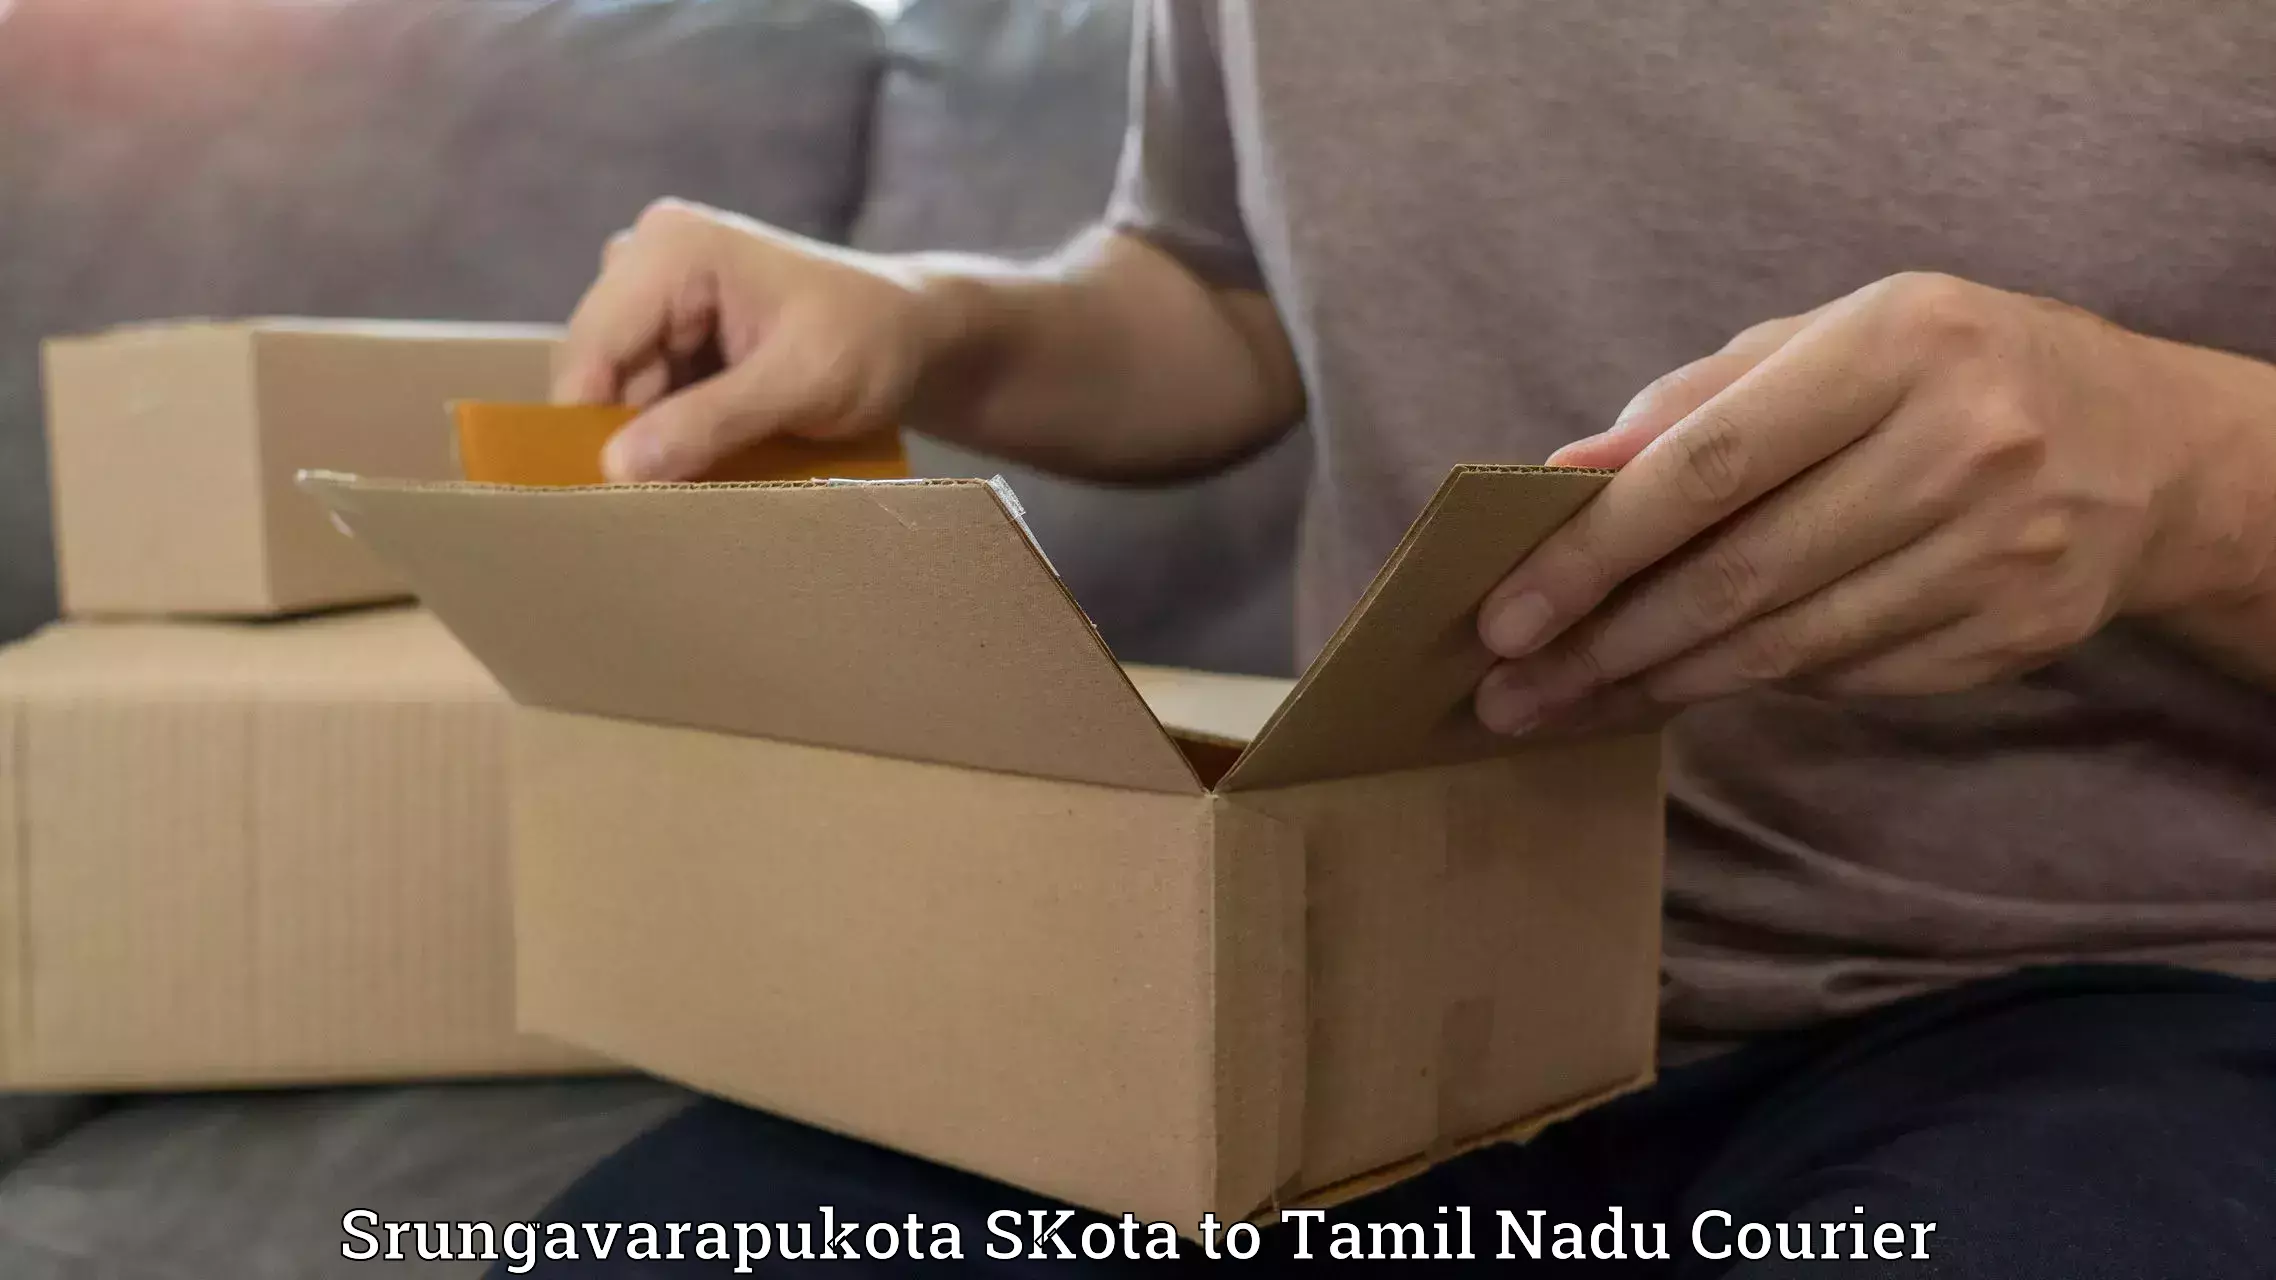 Express delivery network Srungavarapukota SKota to Tamil Nadu